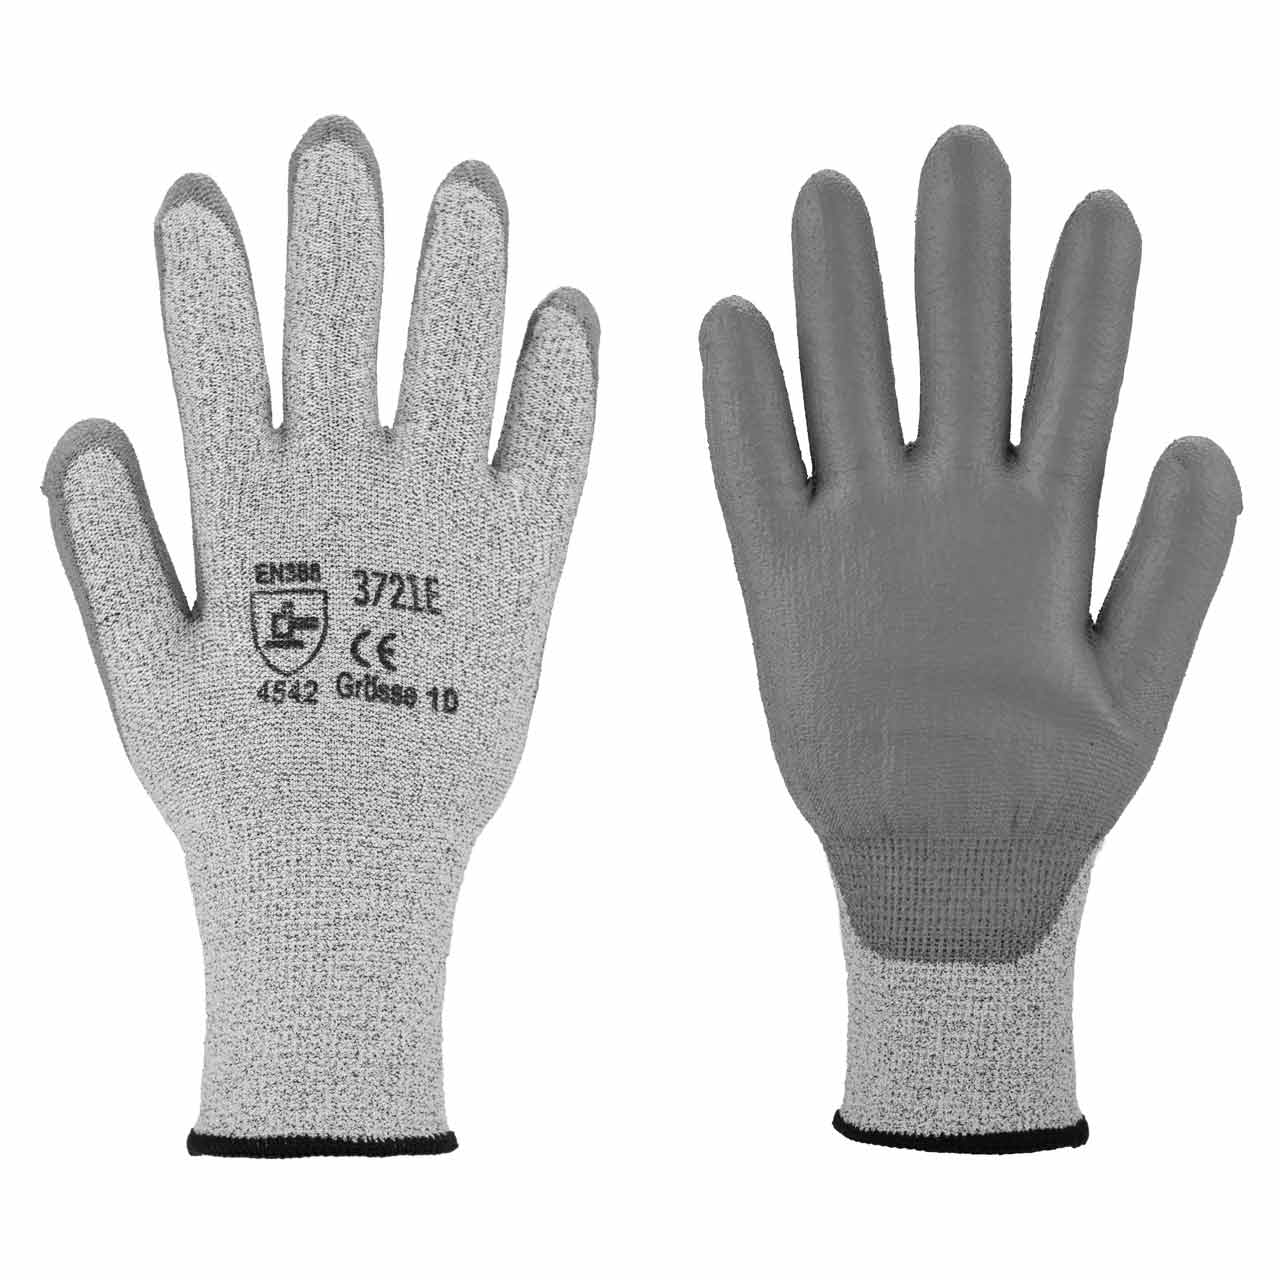 Asatex Schnittschutz-Handschuh Stufe 5 Farbe: grau 3721e